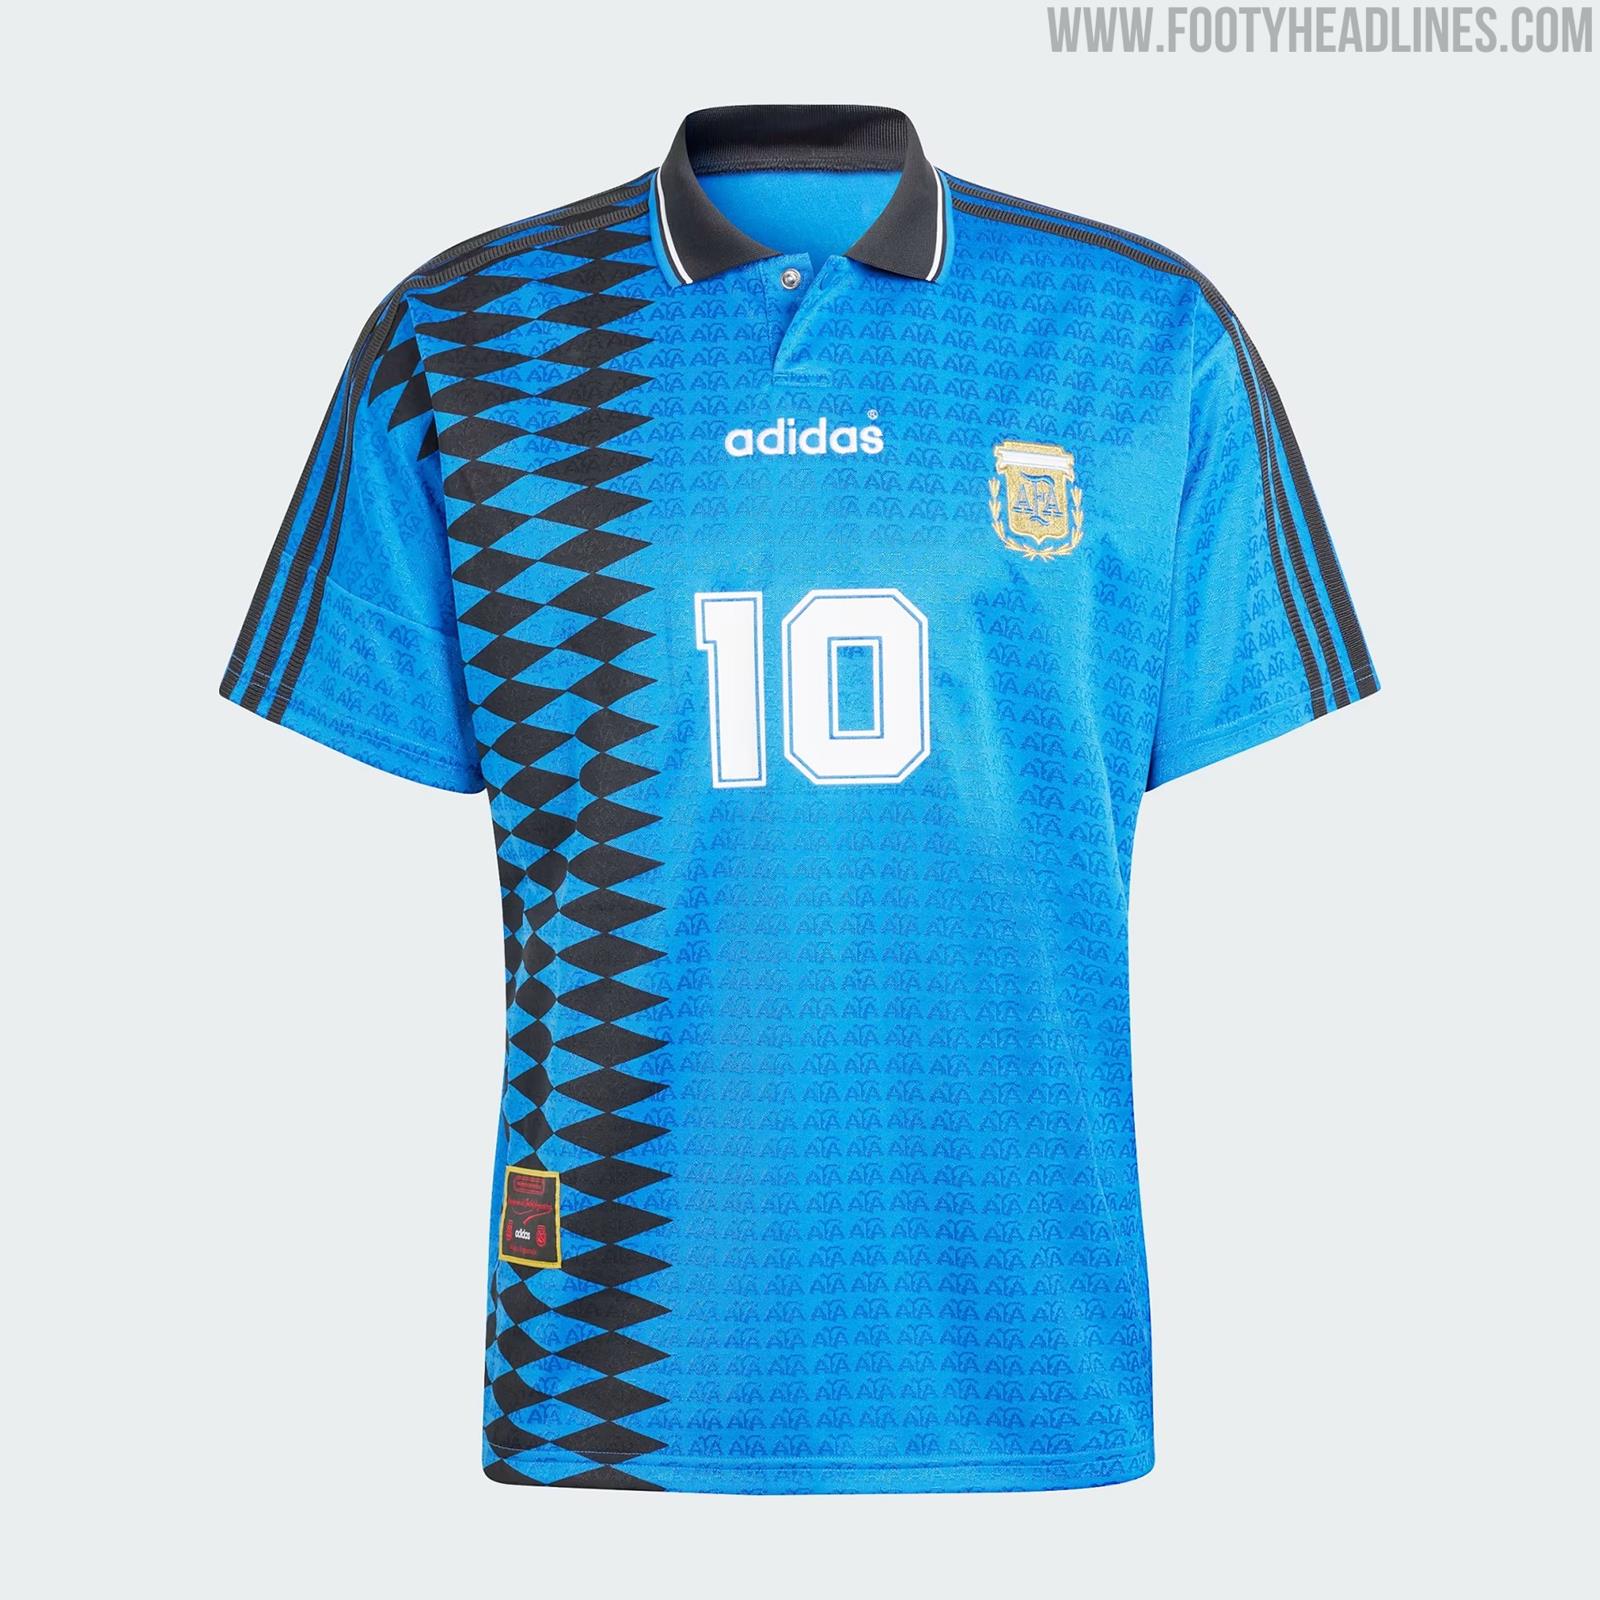 Argentina retro soccer apparel collection